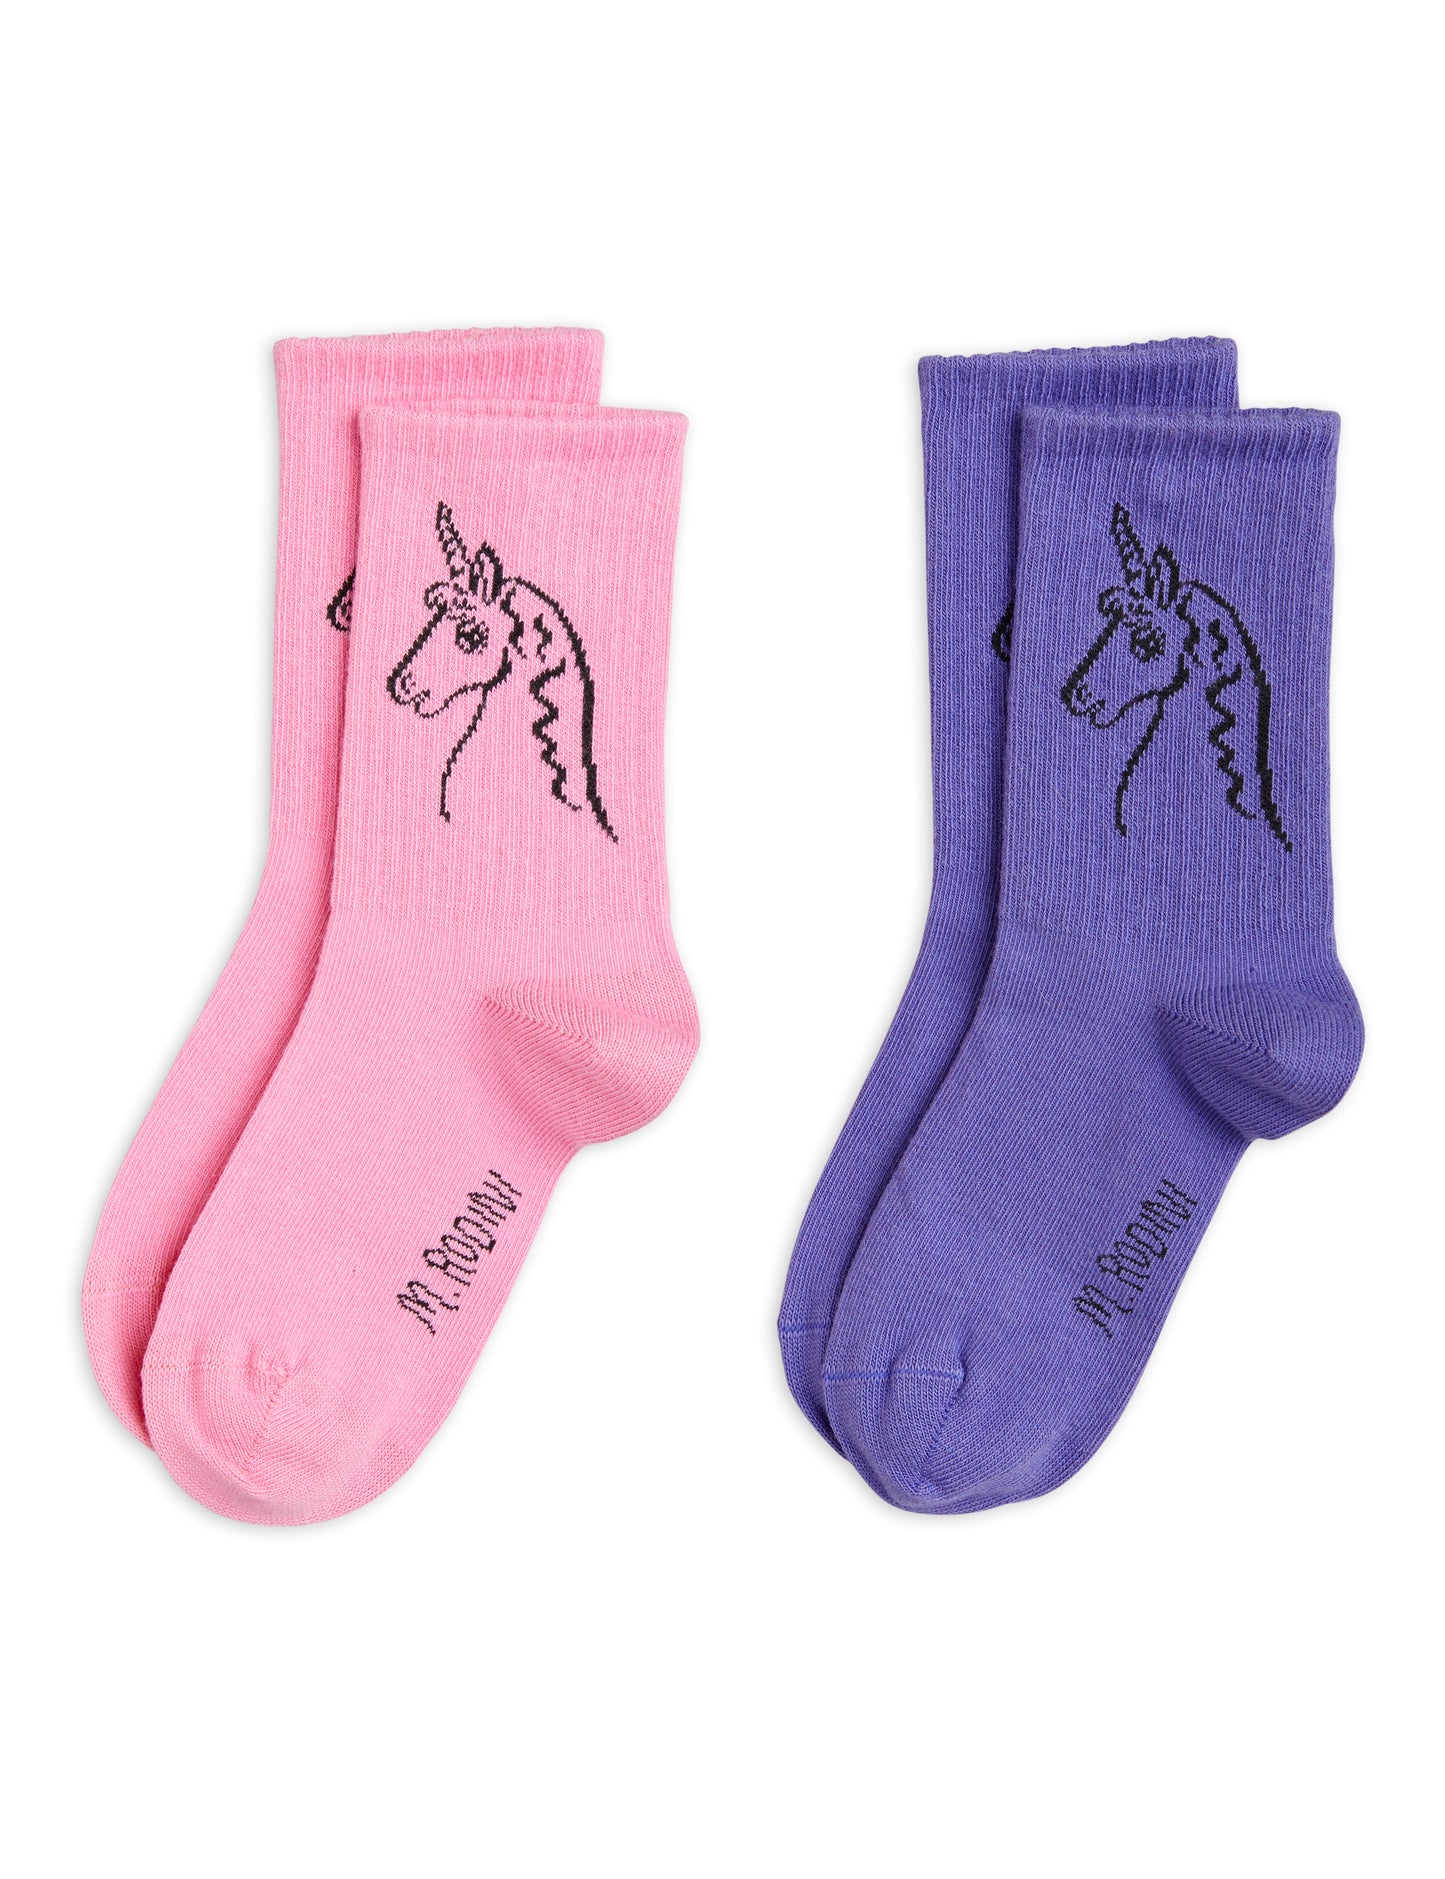 Mini Rodini Scottish Unicorn Socks - 2 pack